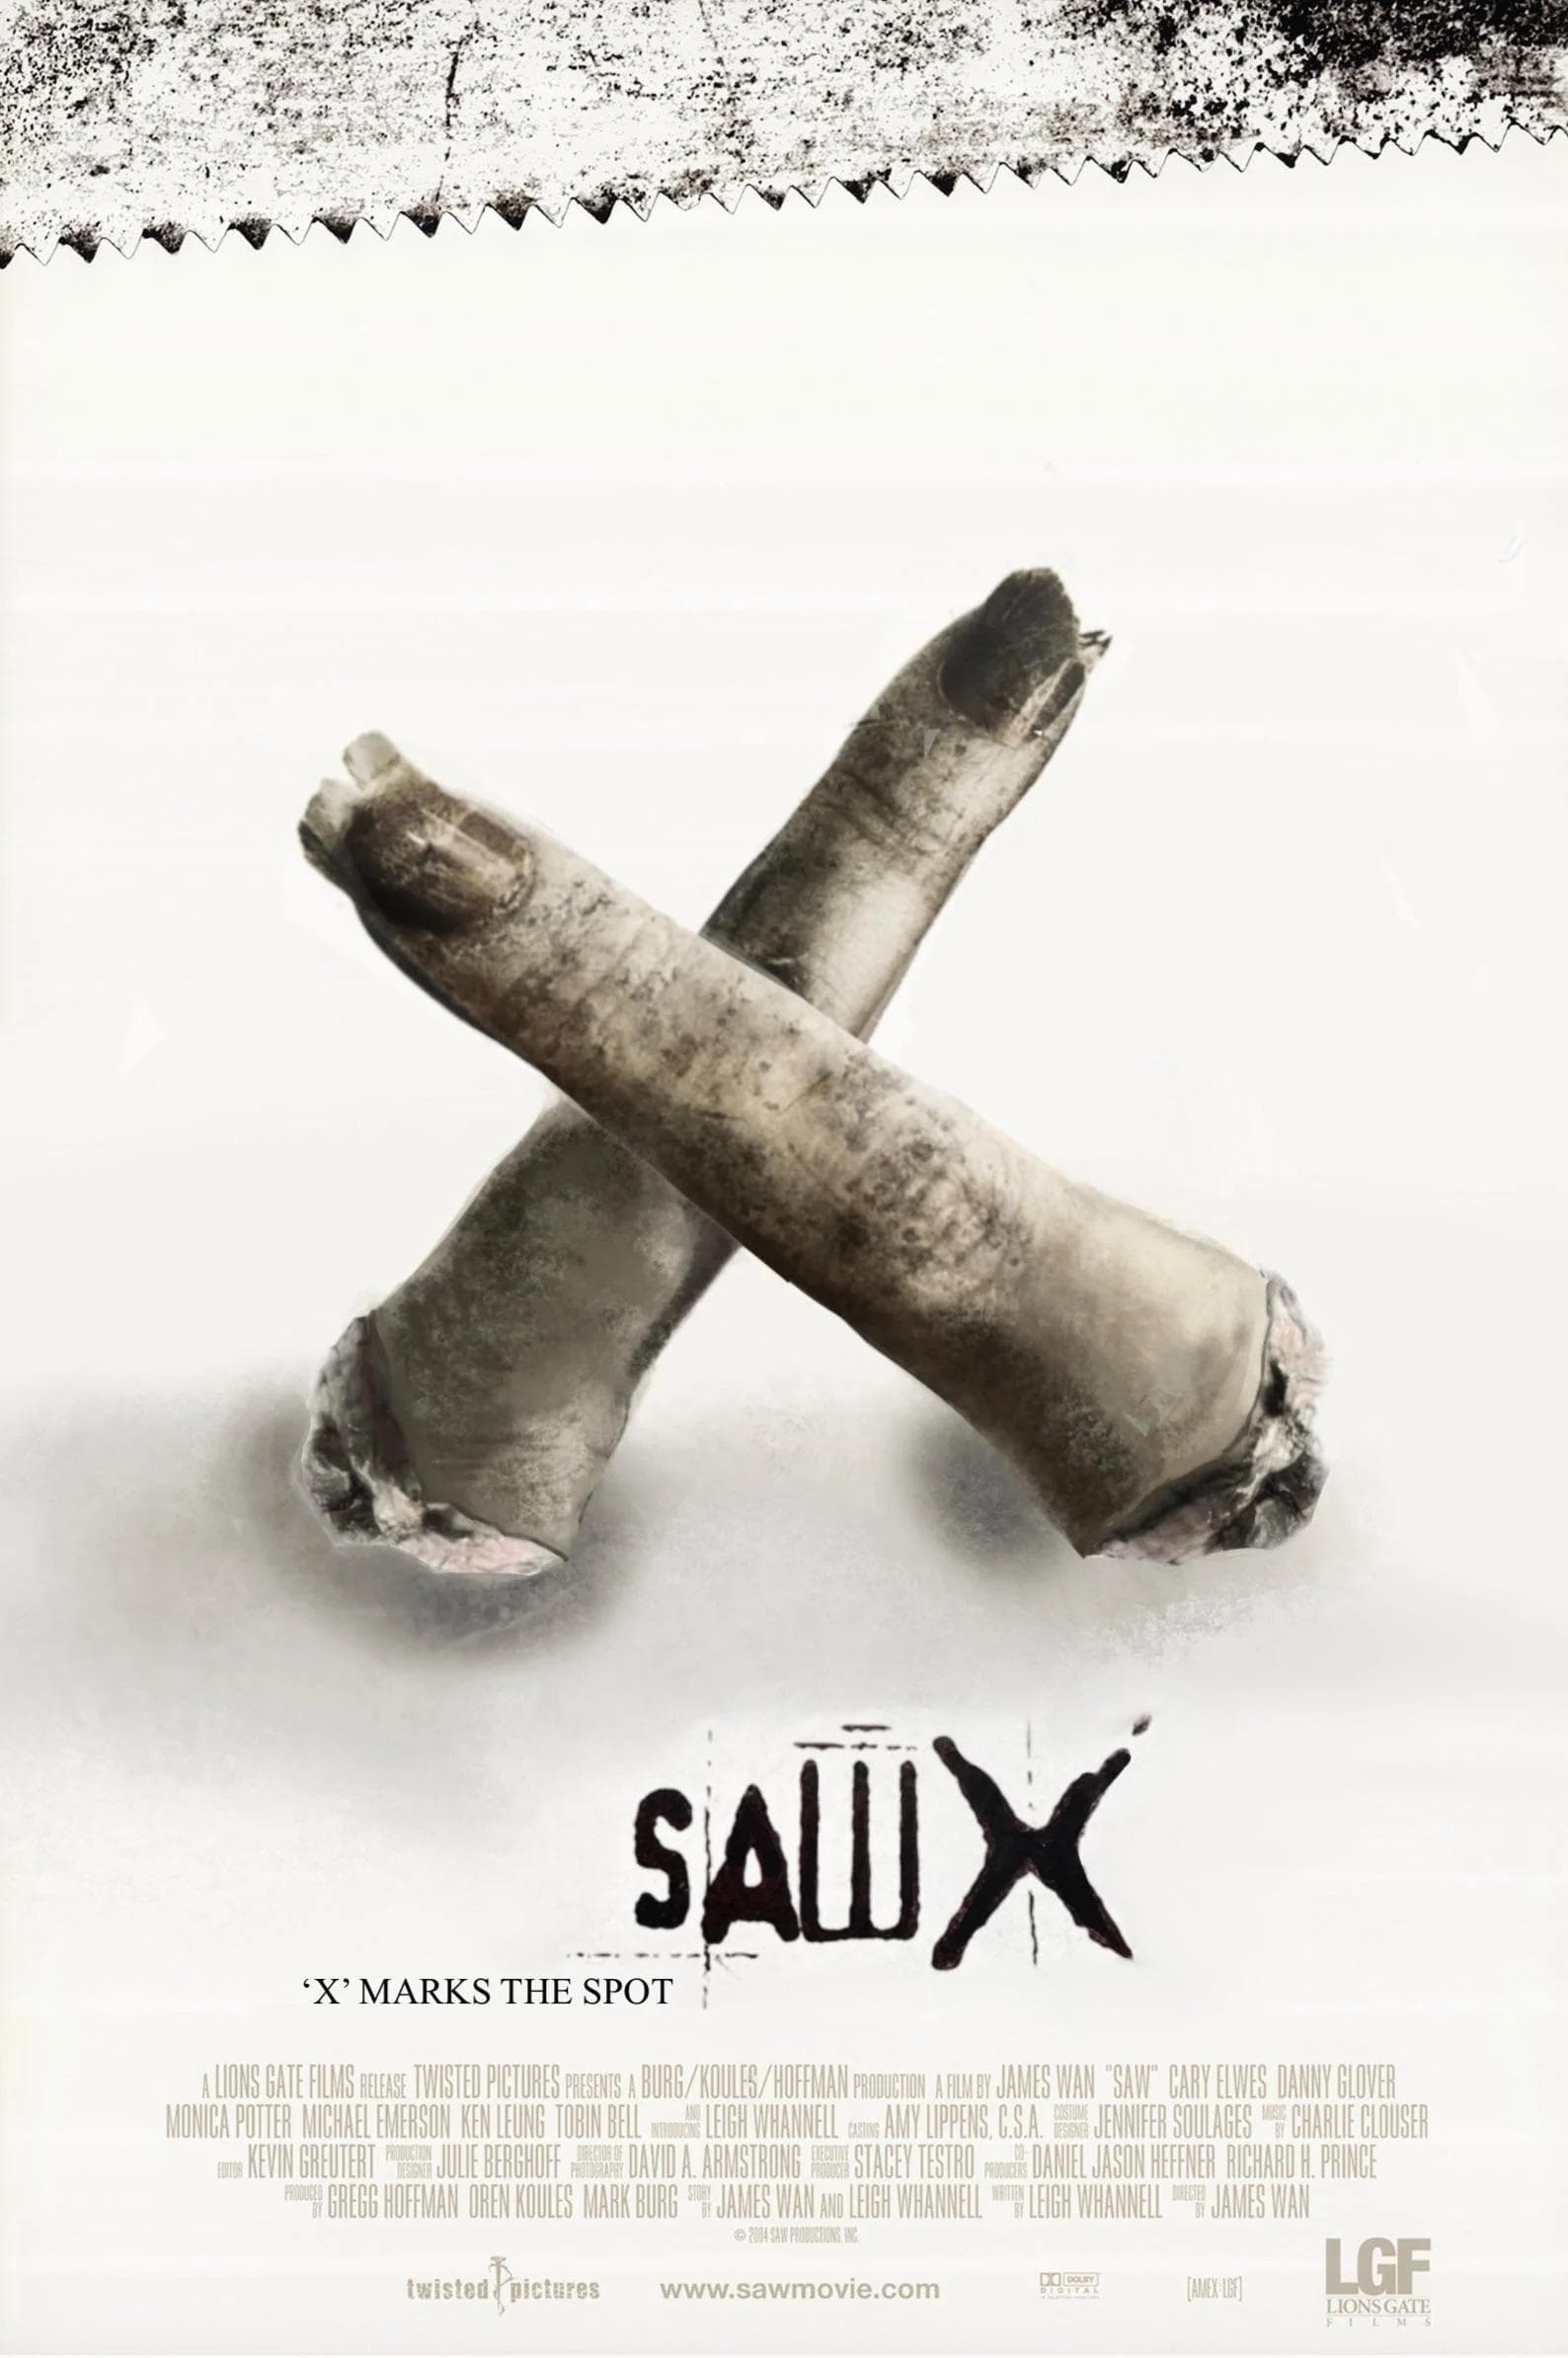 WATCH !! Saw X (2023) FULLMOVIE ONLINE FREE ENGLISH/Dub/SUB Horror STREAMINGS Movie Poster